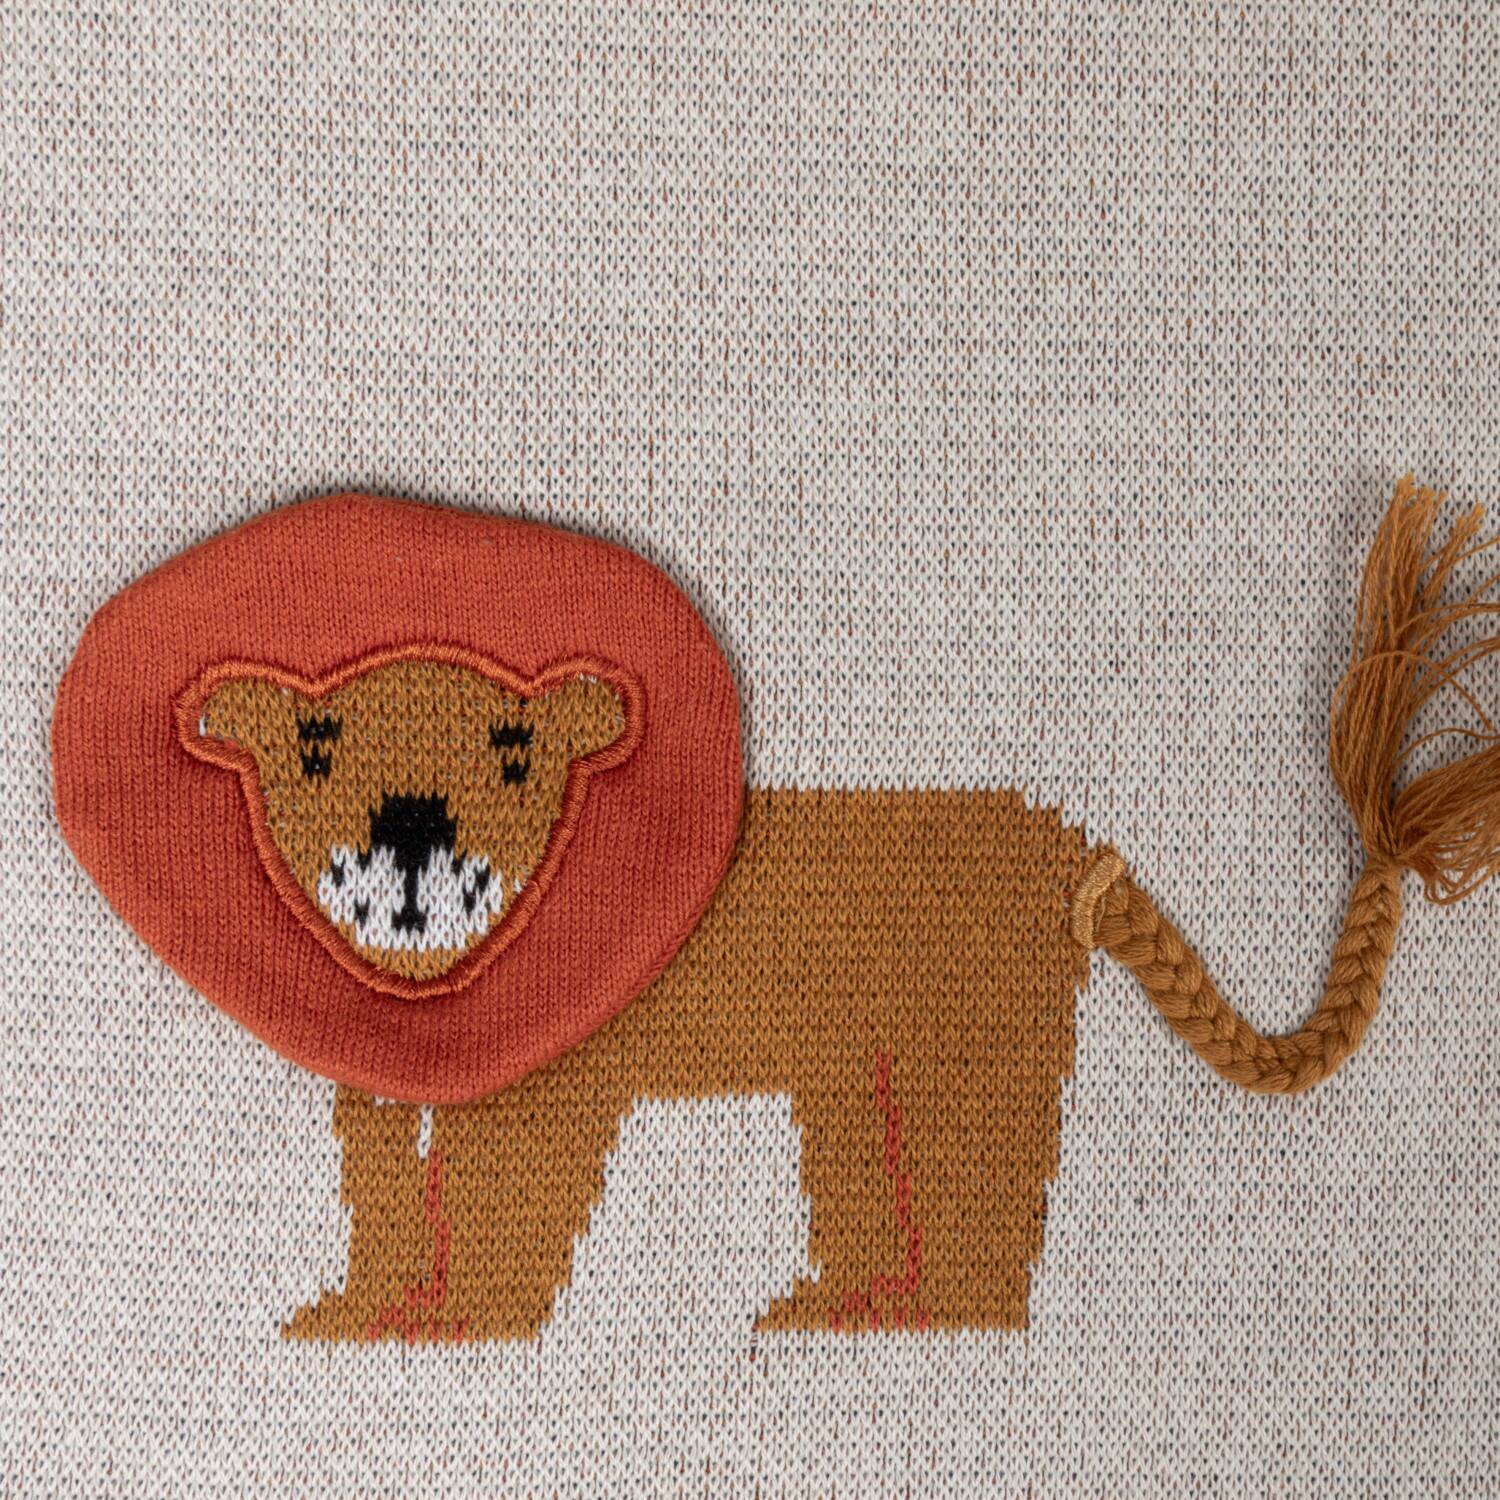 Lion Print Cotton Knit Baby Blanket